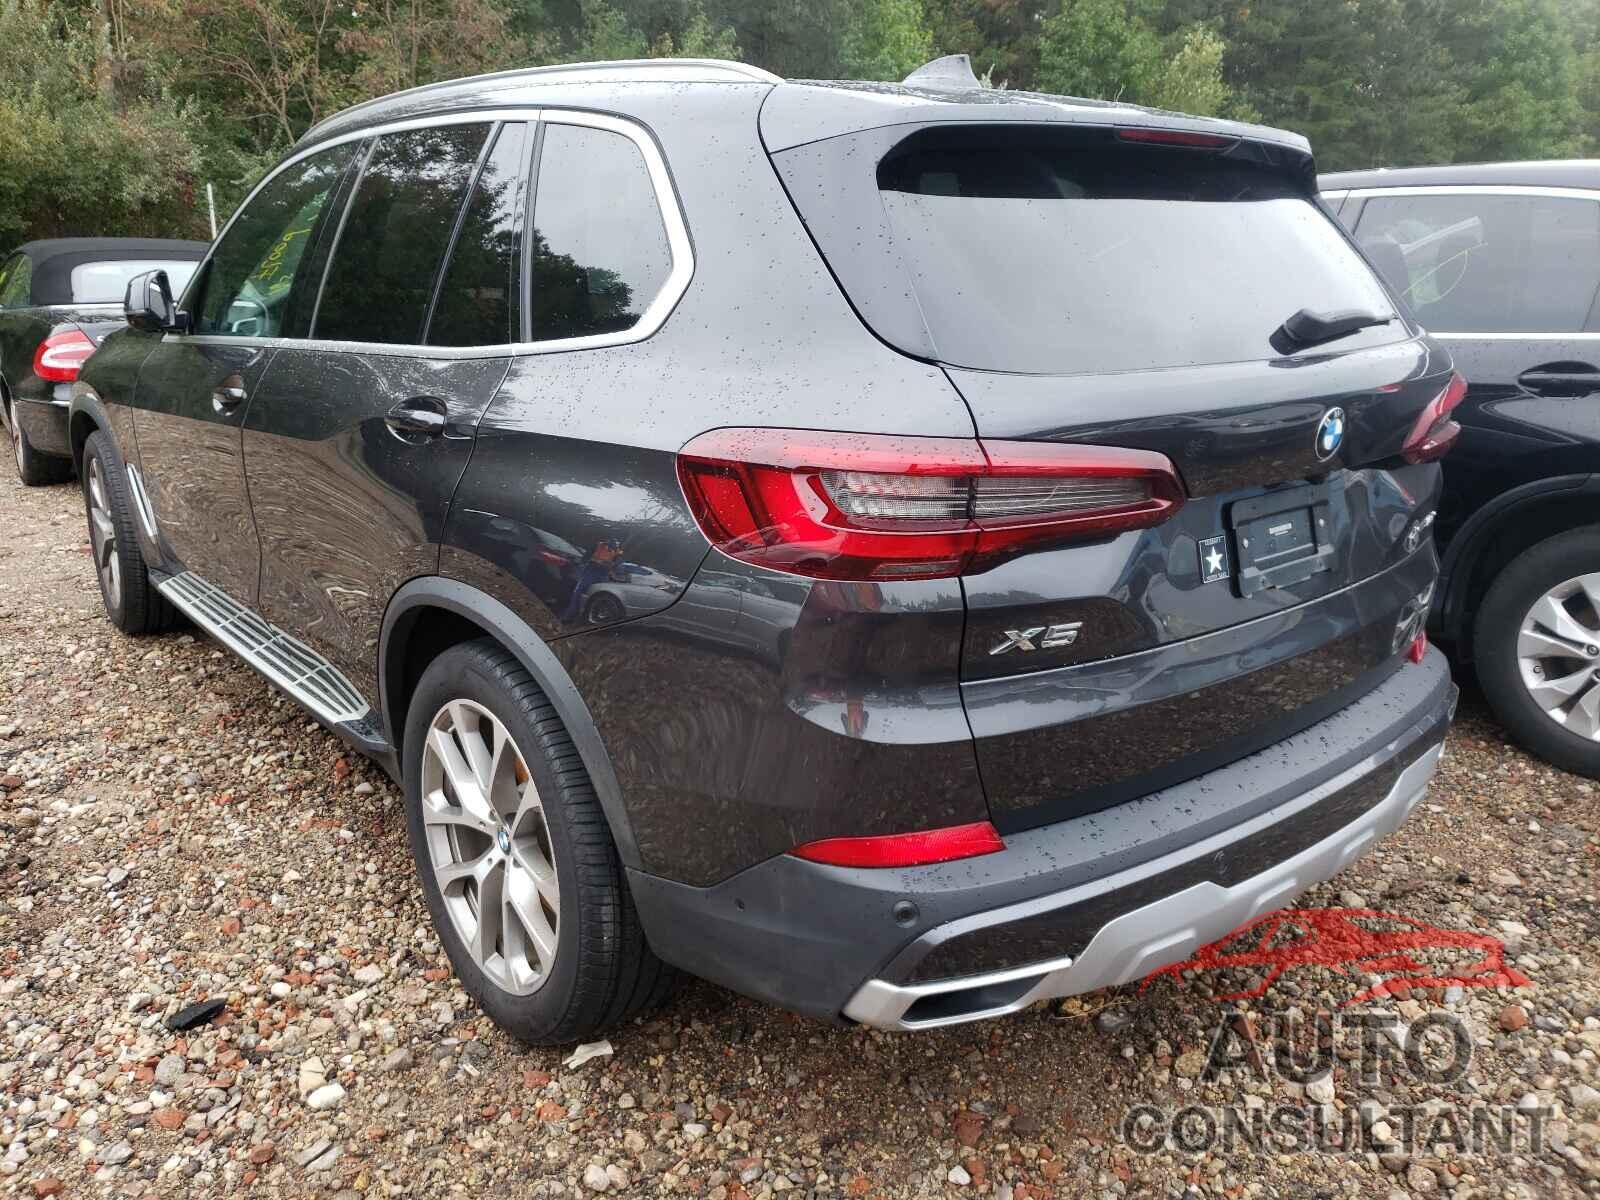 BMW X5 2020 - 5UXCR6C01L9C87254